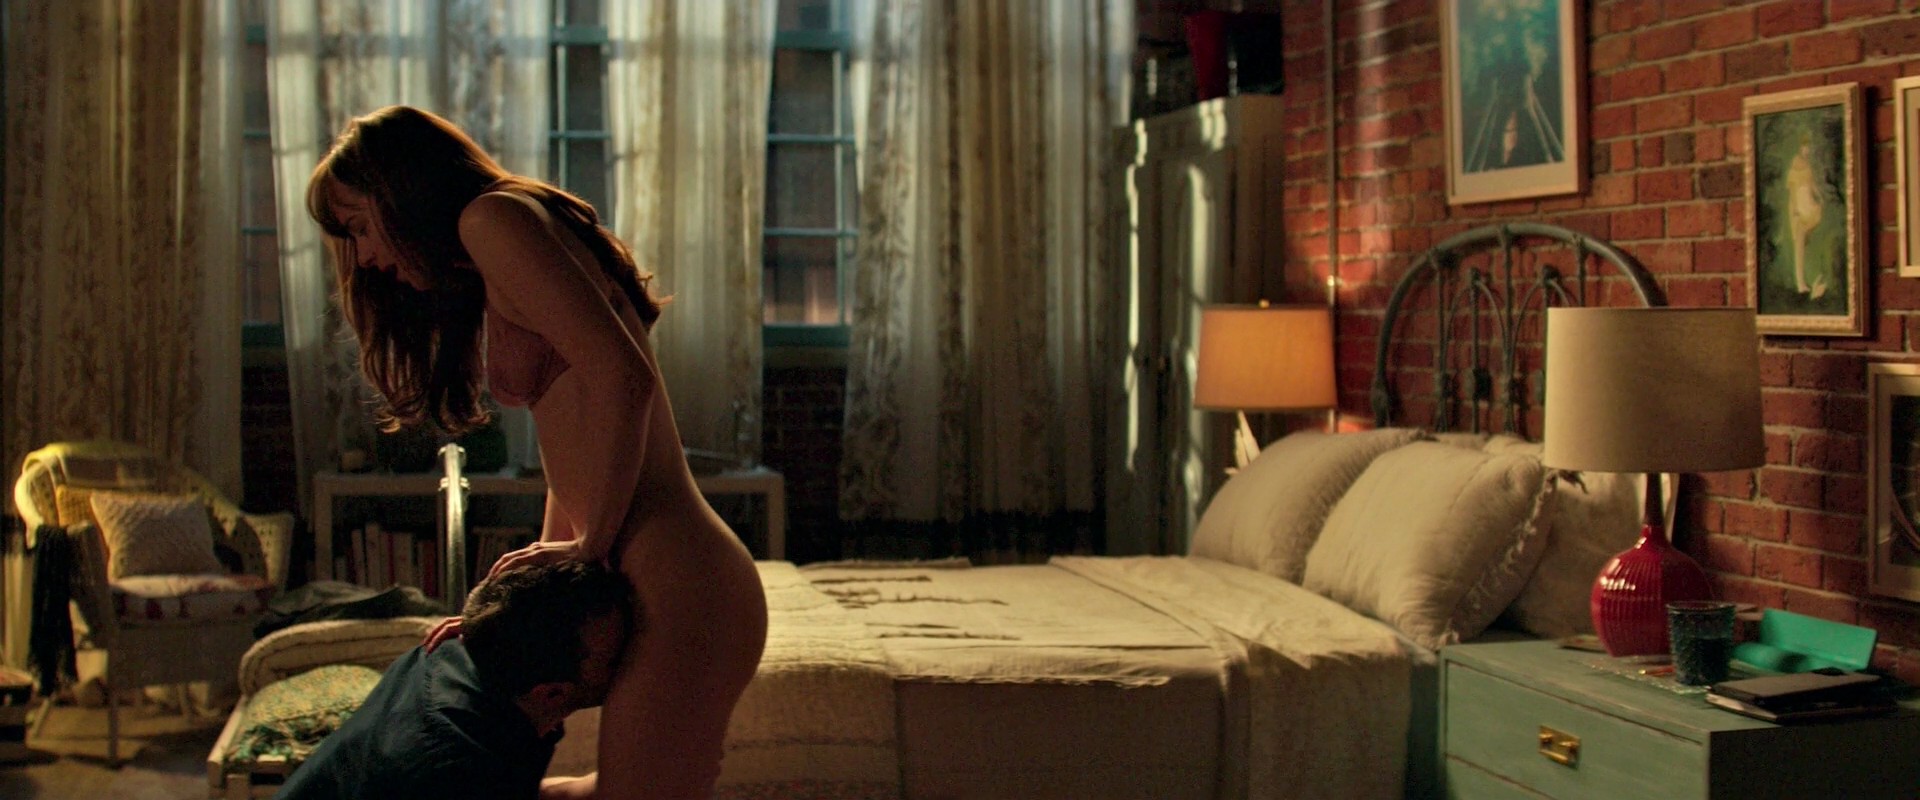 Dakota Johnson Fifty Shades Darker 01 4. Dakota Johnson Nude - ULTIMATE Col...